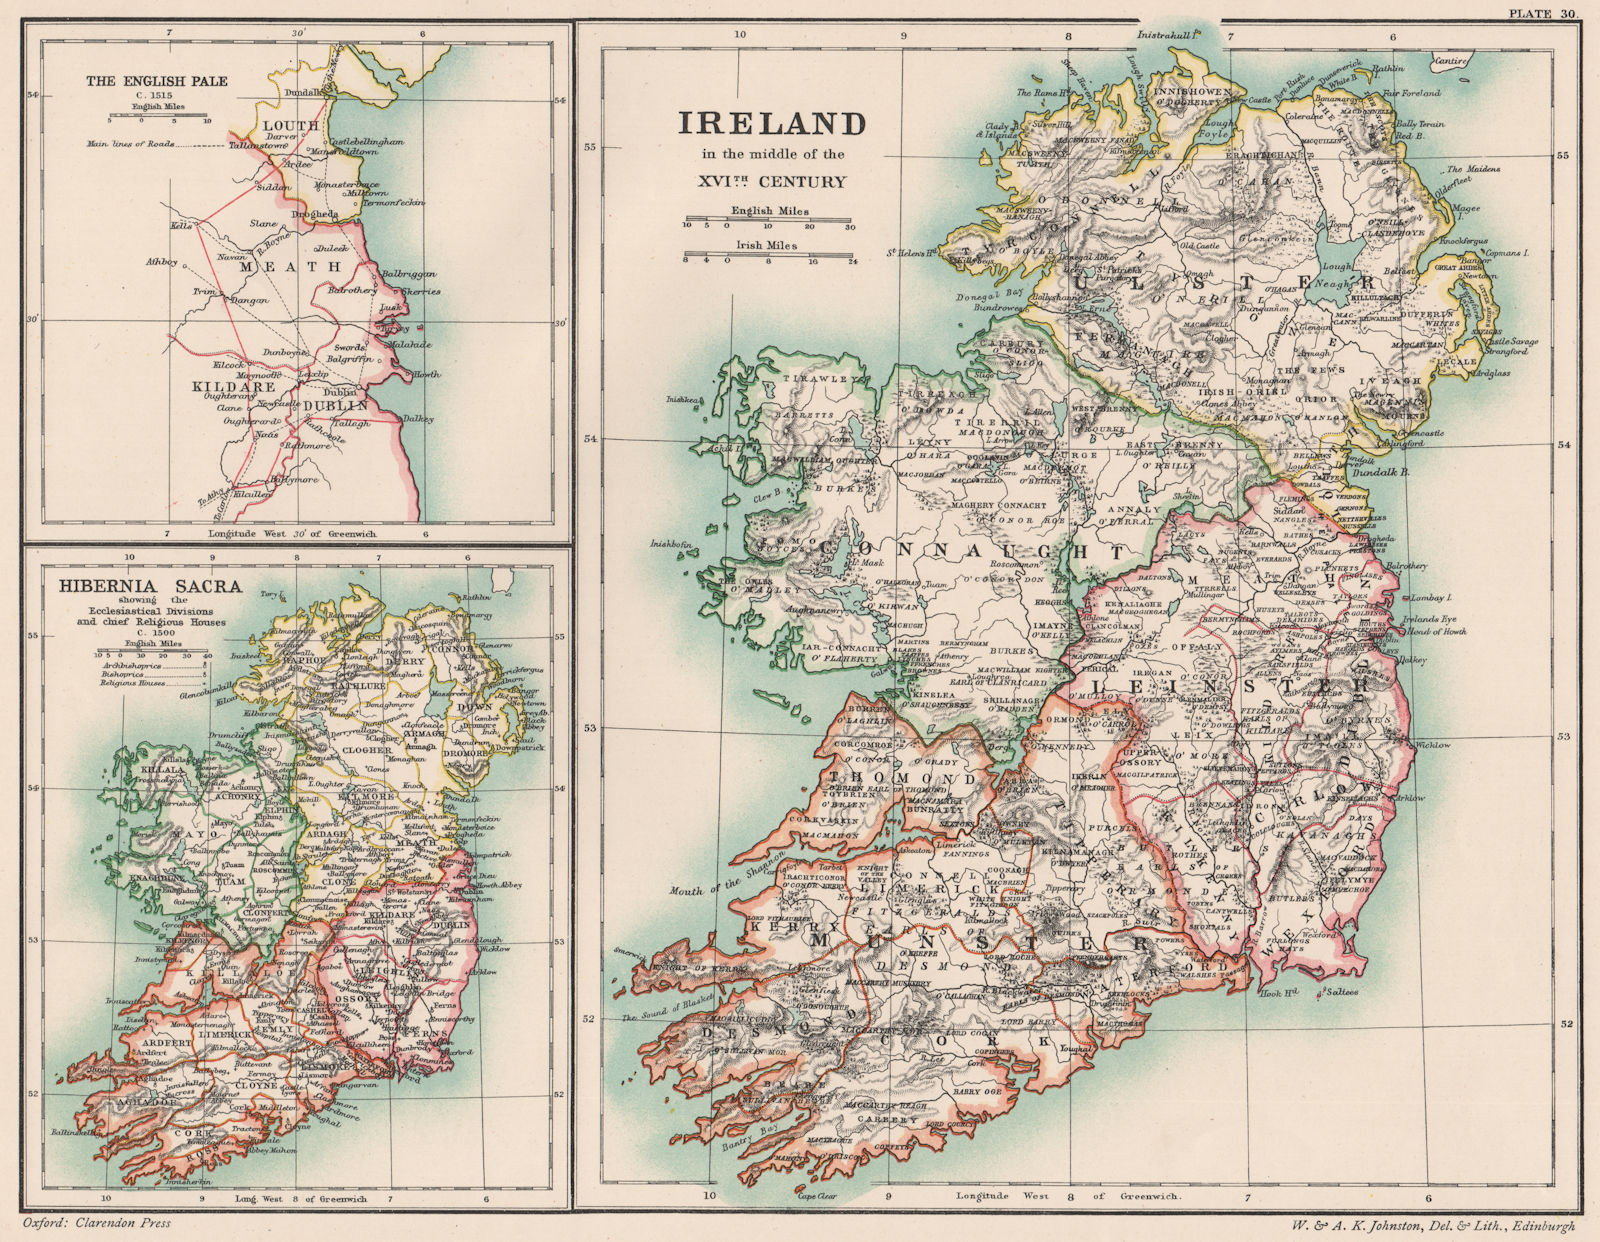 16TH CENTURY IRELAND. Inset the English Pale 1515 & Hibernia Sacra 1500 1902 map